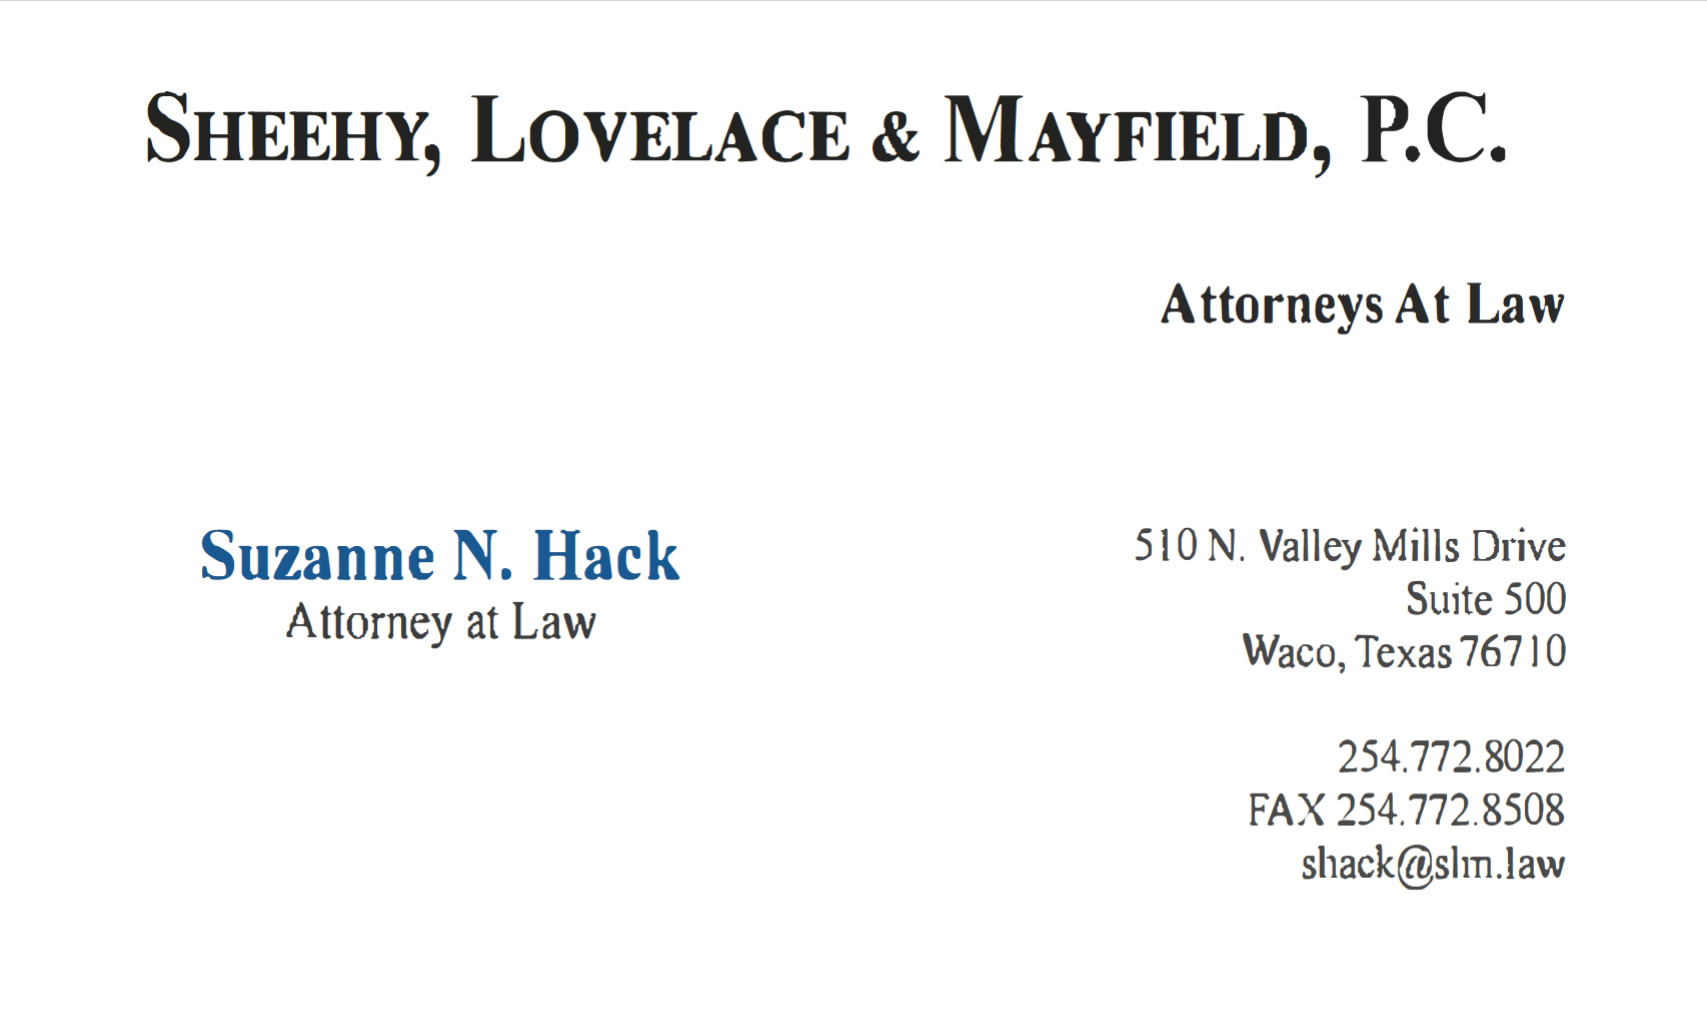 Sheehy, Lovelace & Mayfield, P.C. - Waco, Texas - Suzanne Hack